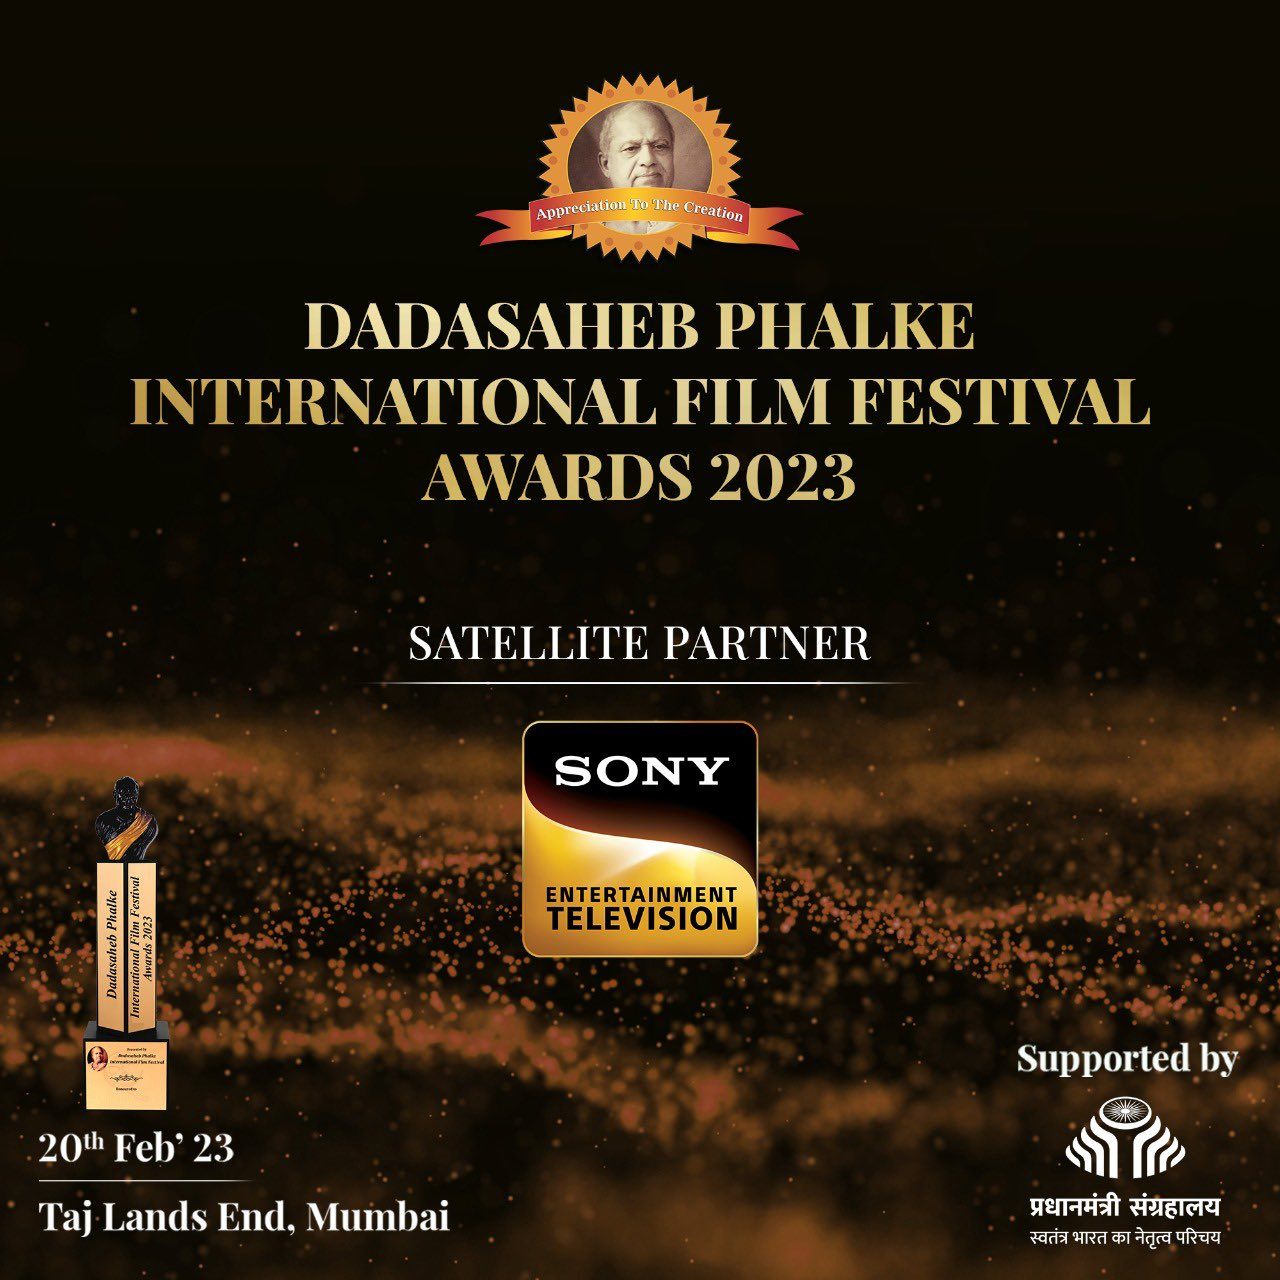 Dadasaheb Phalke International Film Festival Awards 2023 in Mumbai on Jan. 20th to 23rd 2023